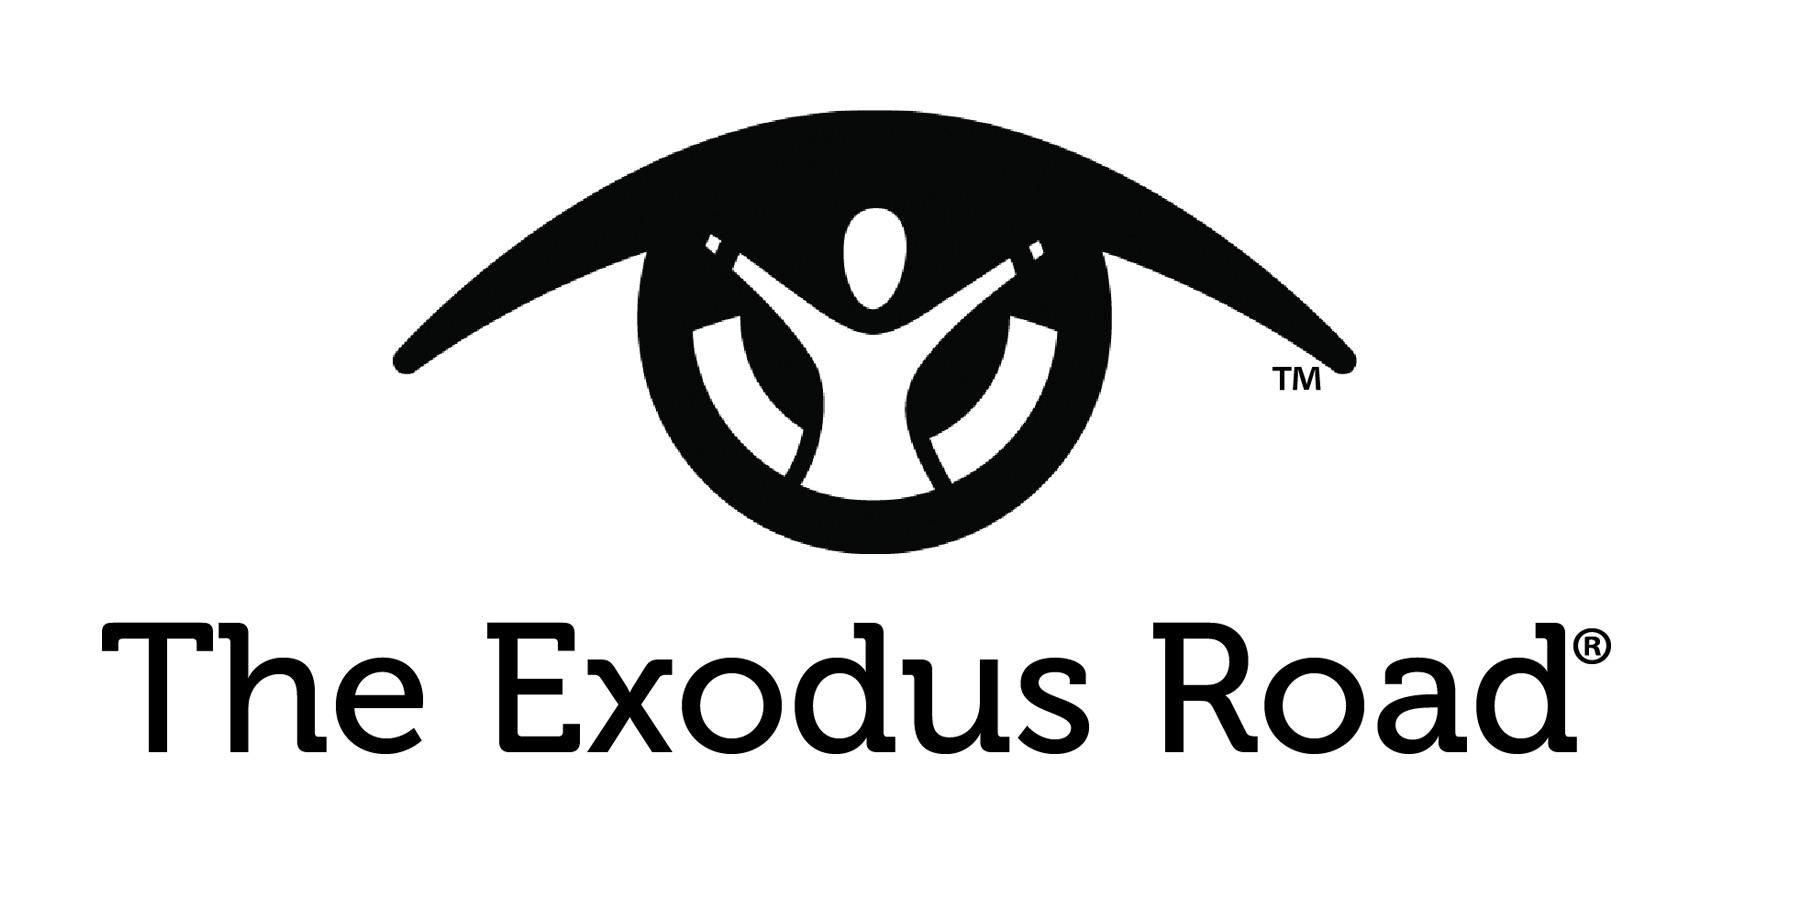 The Exodus Road